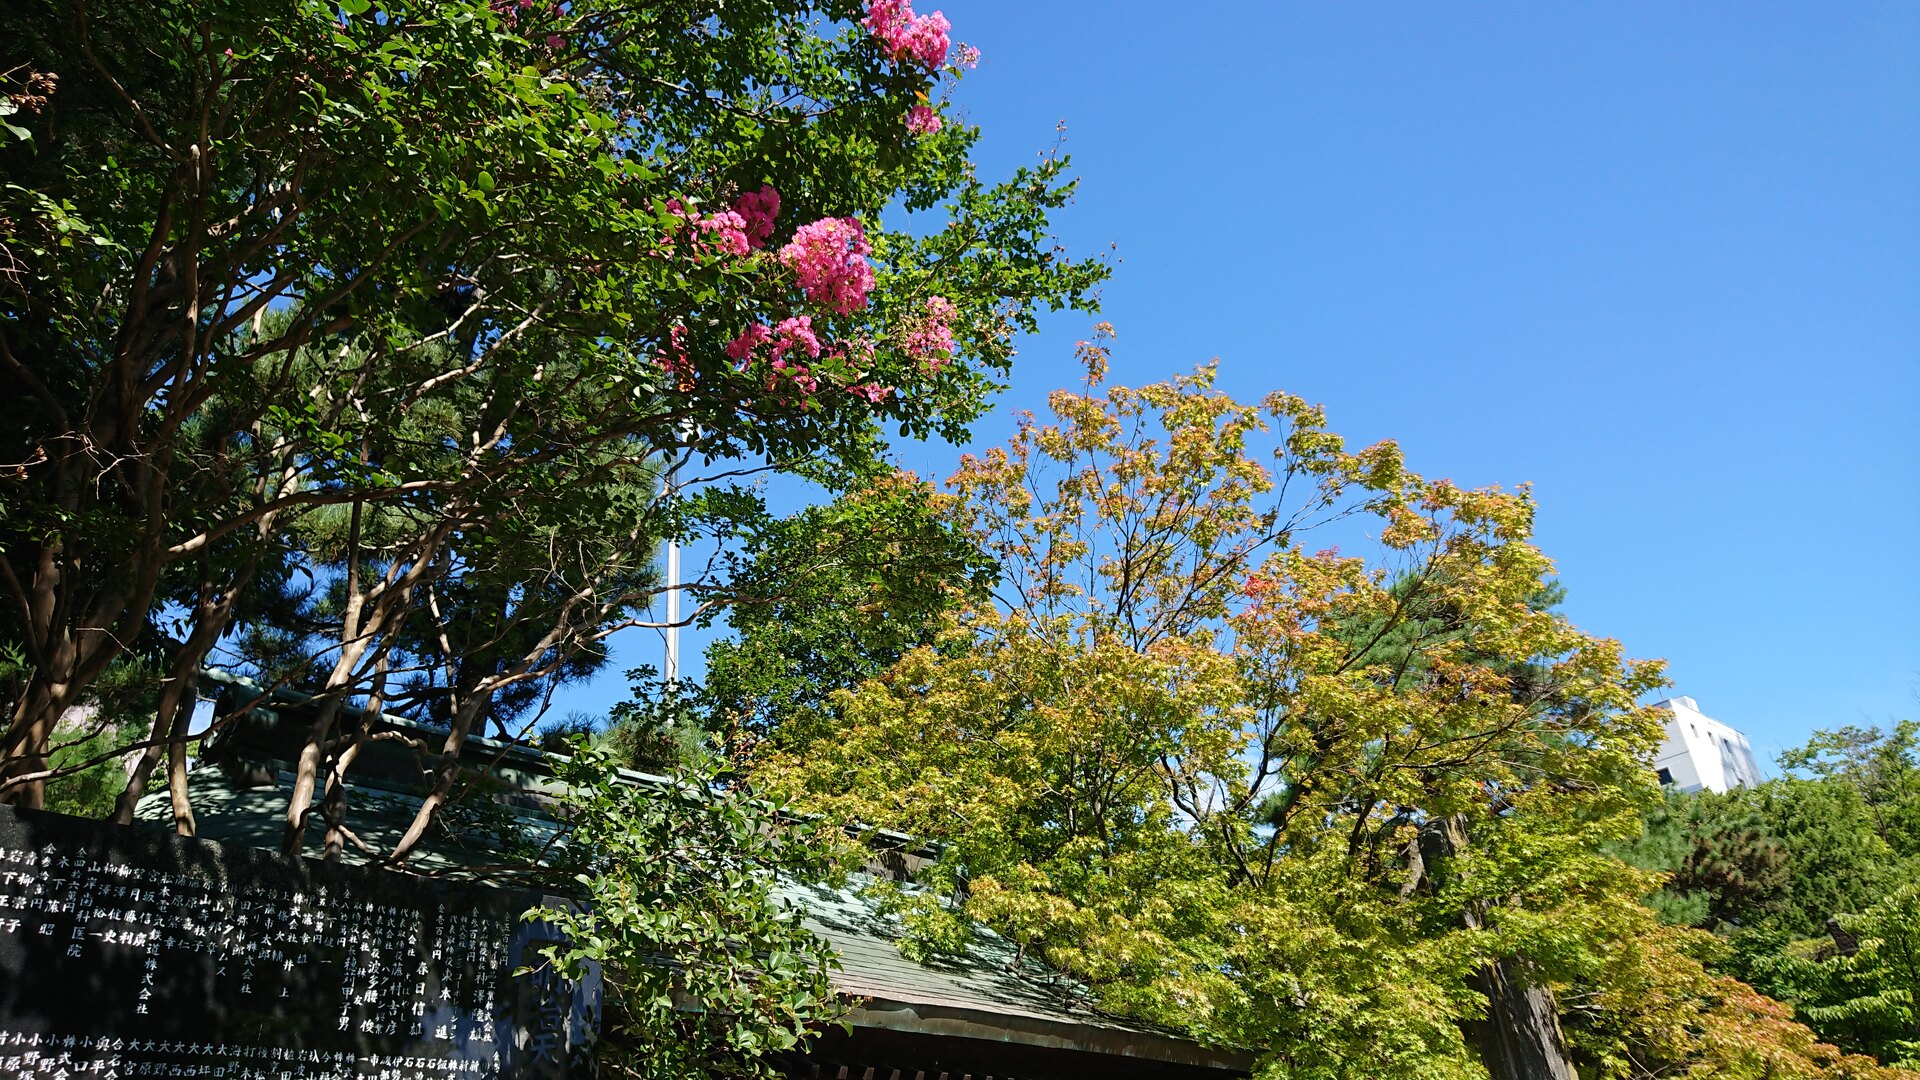 日本の風景 四柱神社を彩る真夏 壁紙19x1080 壁紙館